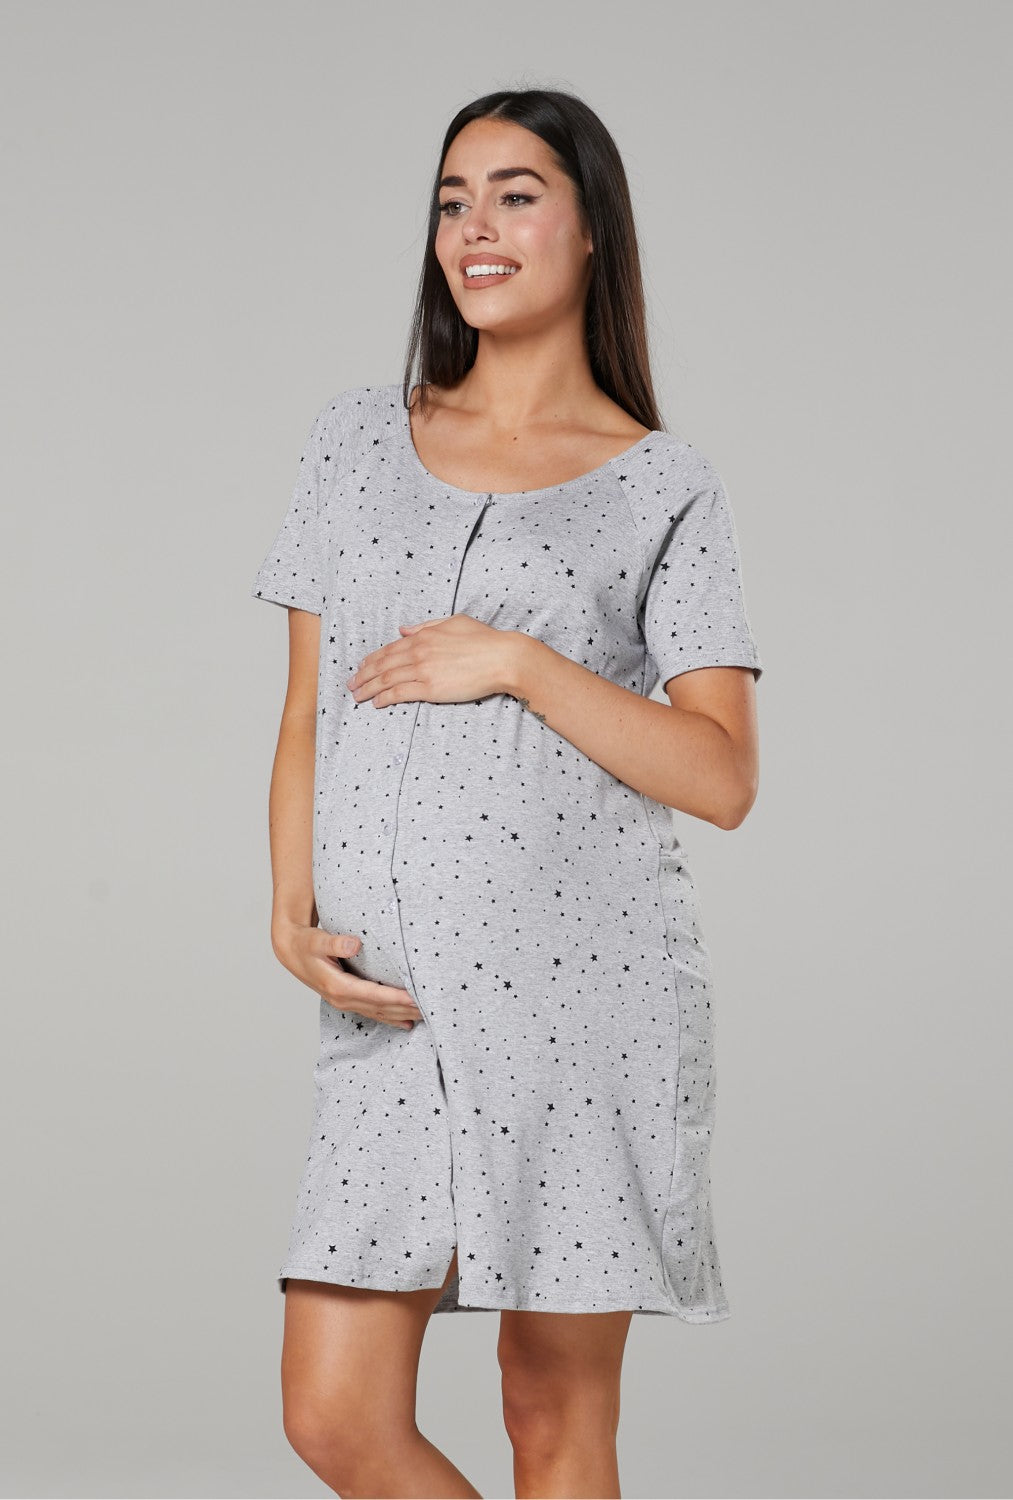 Maternity Breastfeeding Printed Nightdress